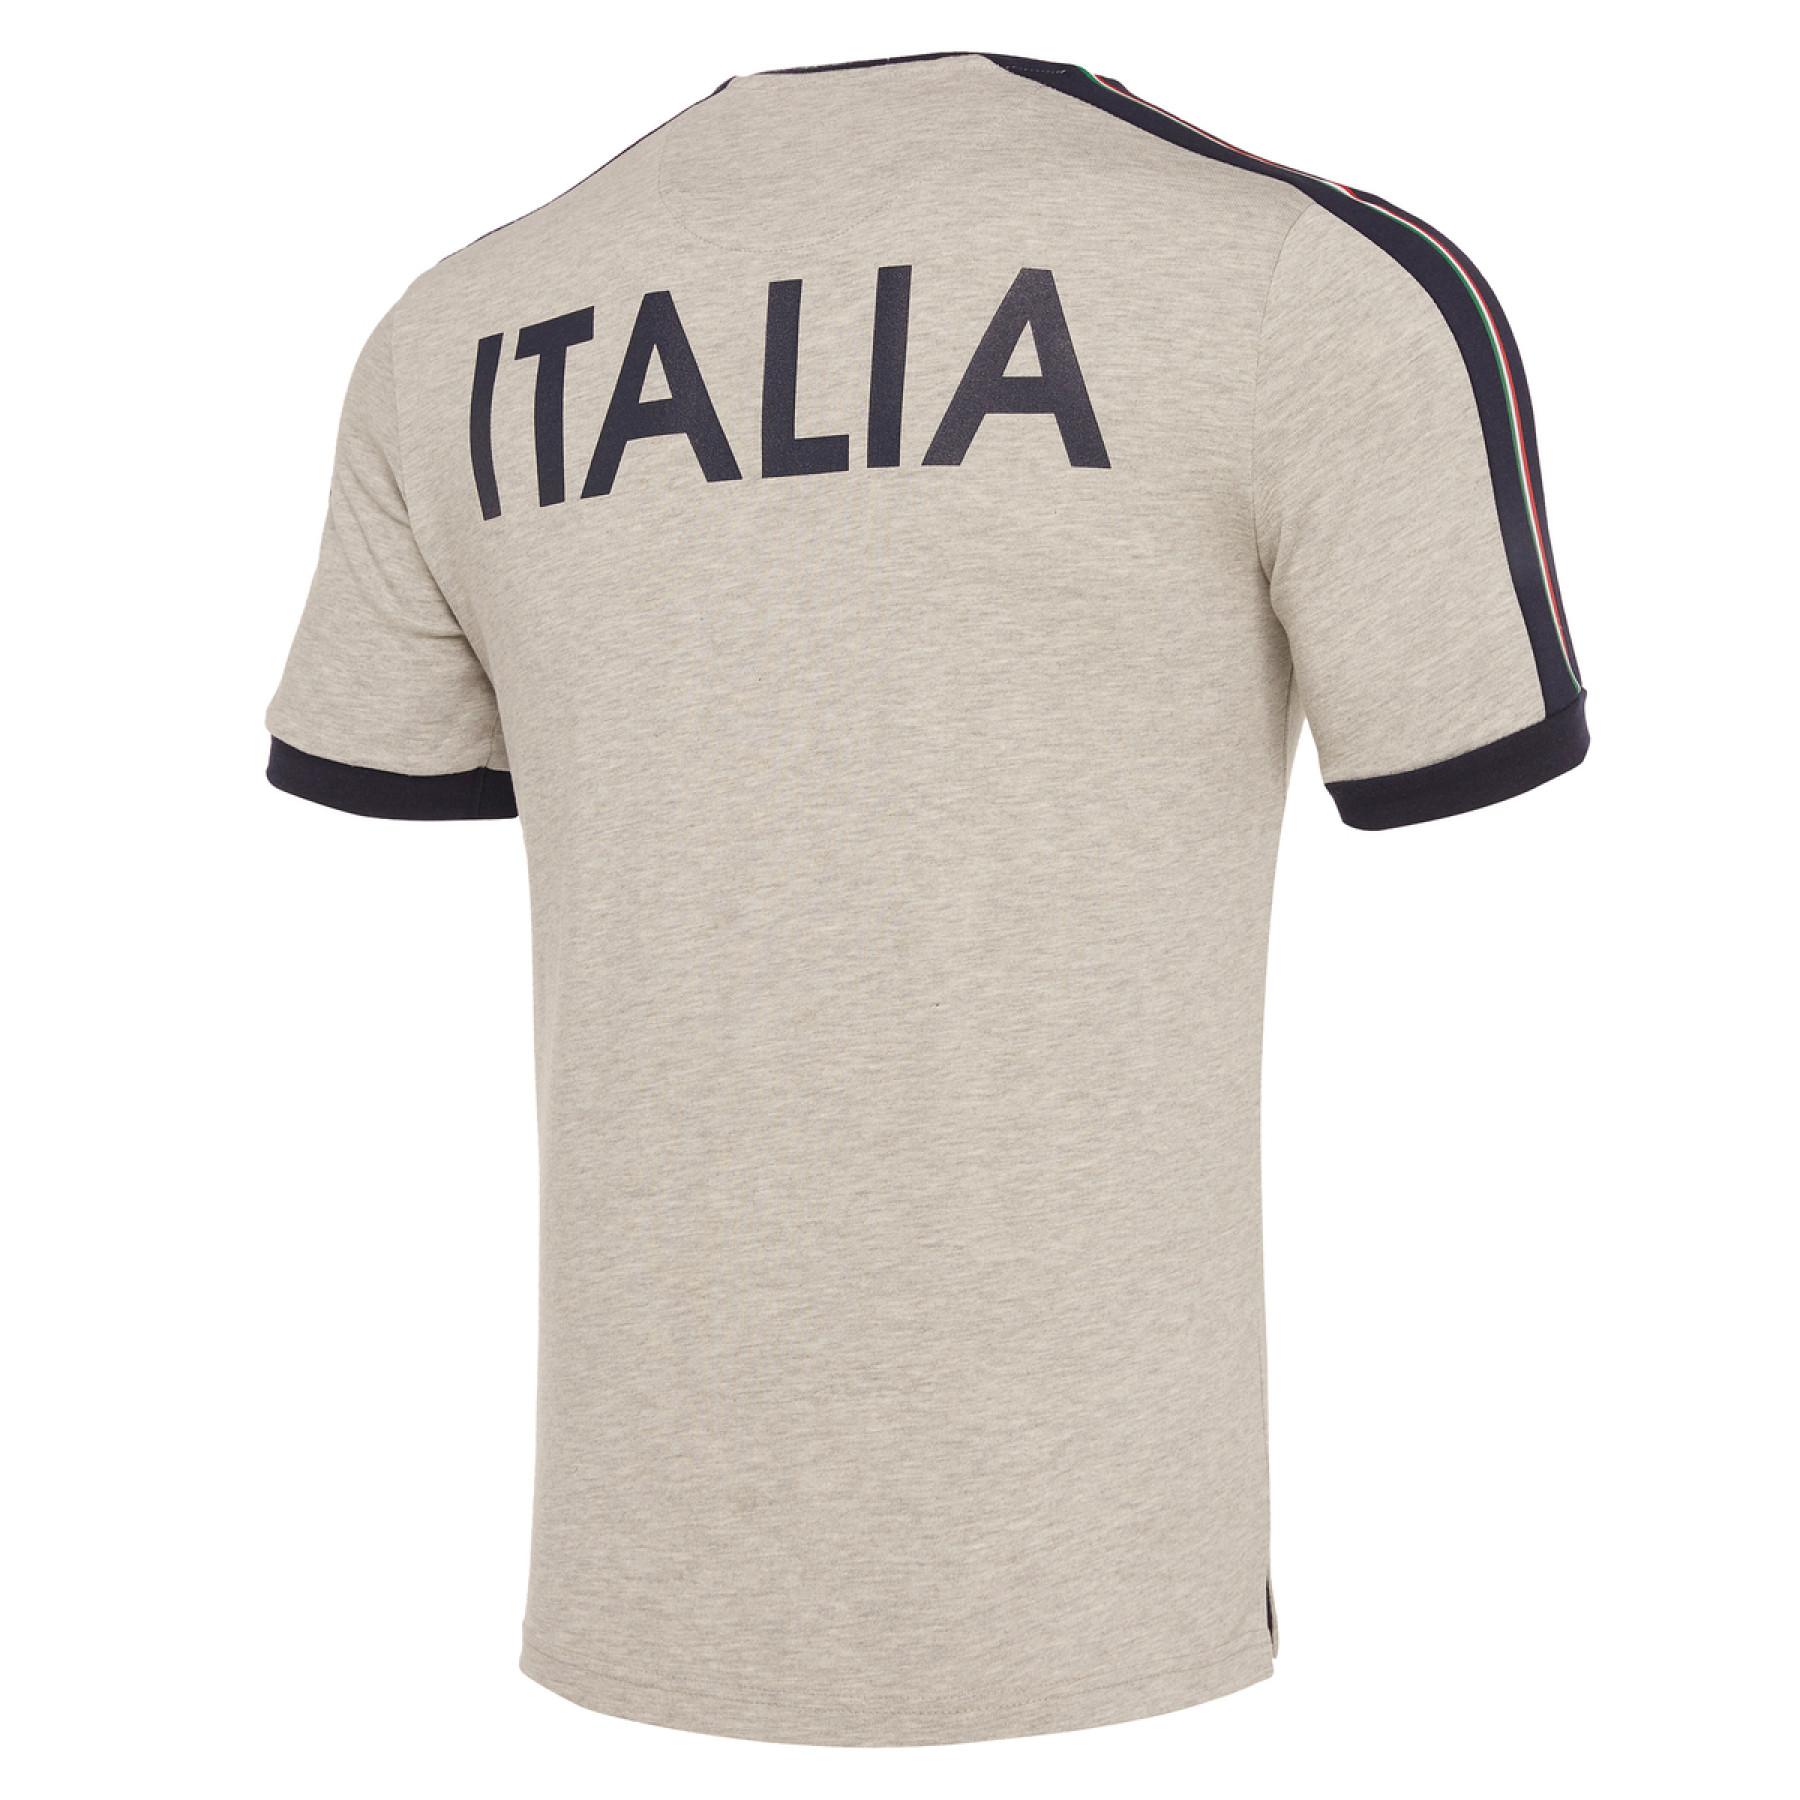 T-shirt Cotone Italie rubgy 2019